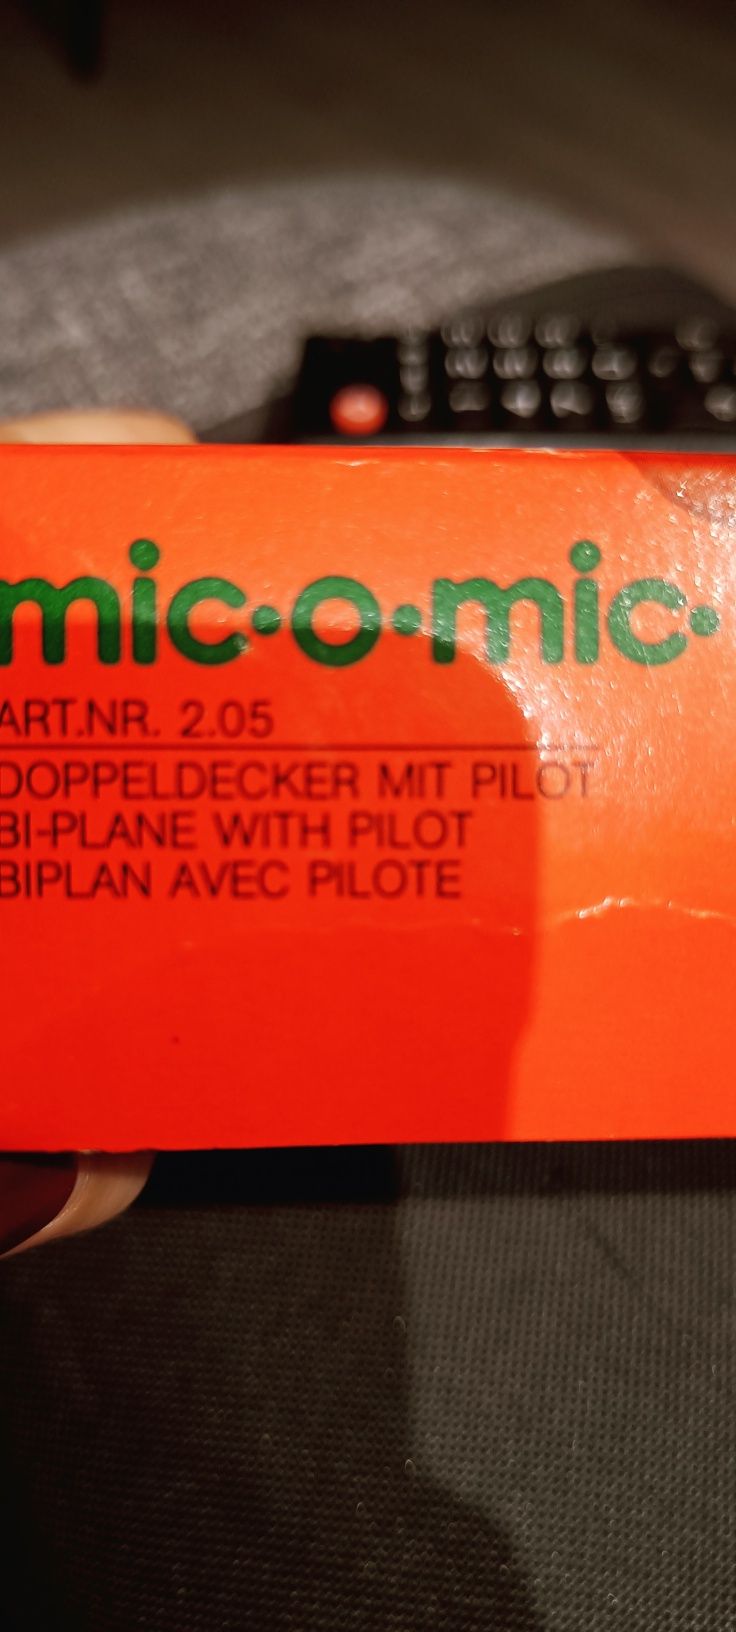 Mic-o-mic Bi-Plane with pilot